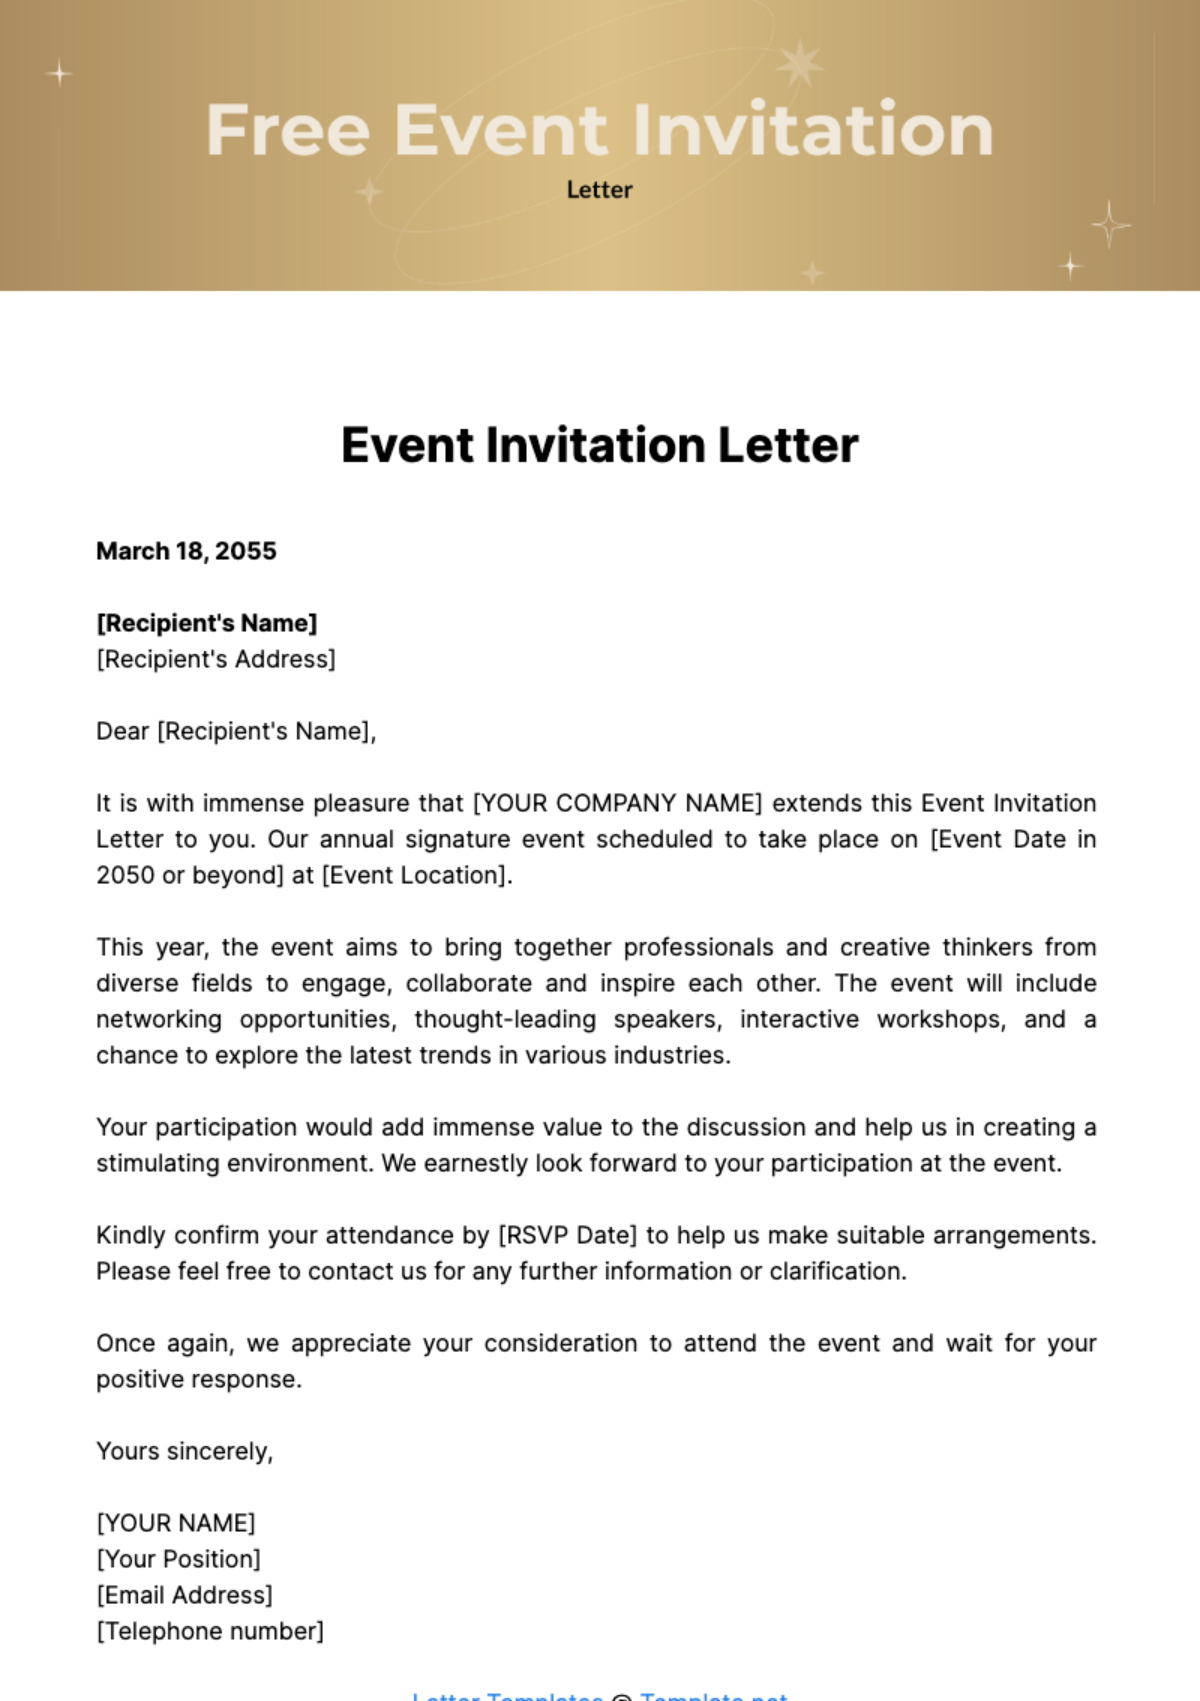 Free Event Invitation Letter Template